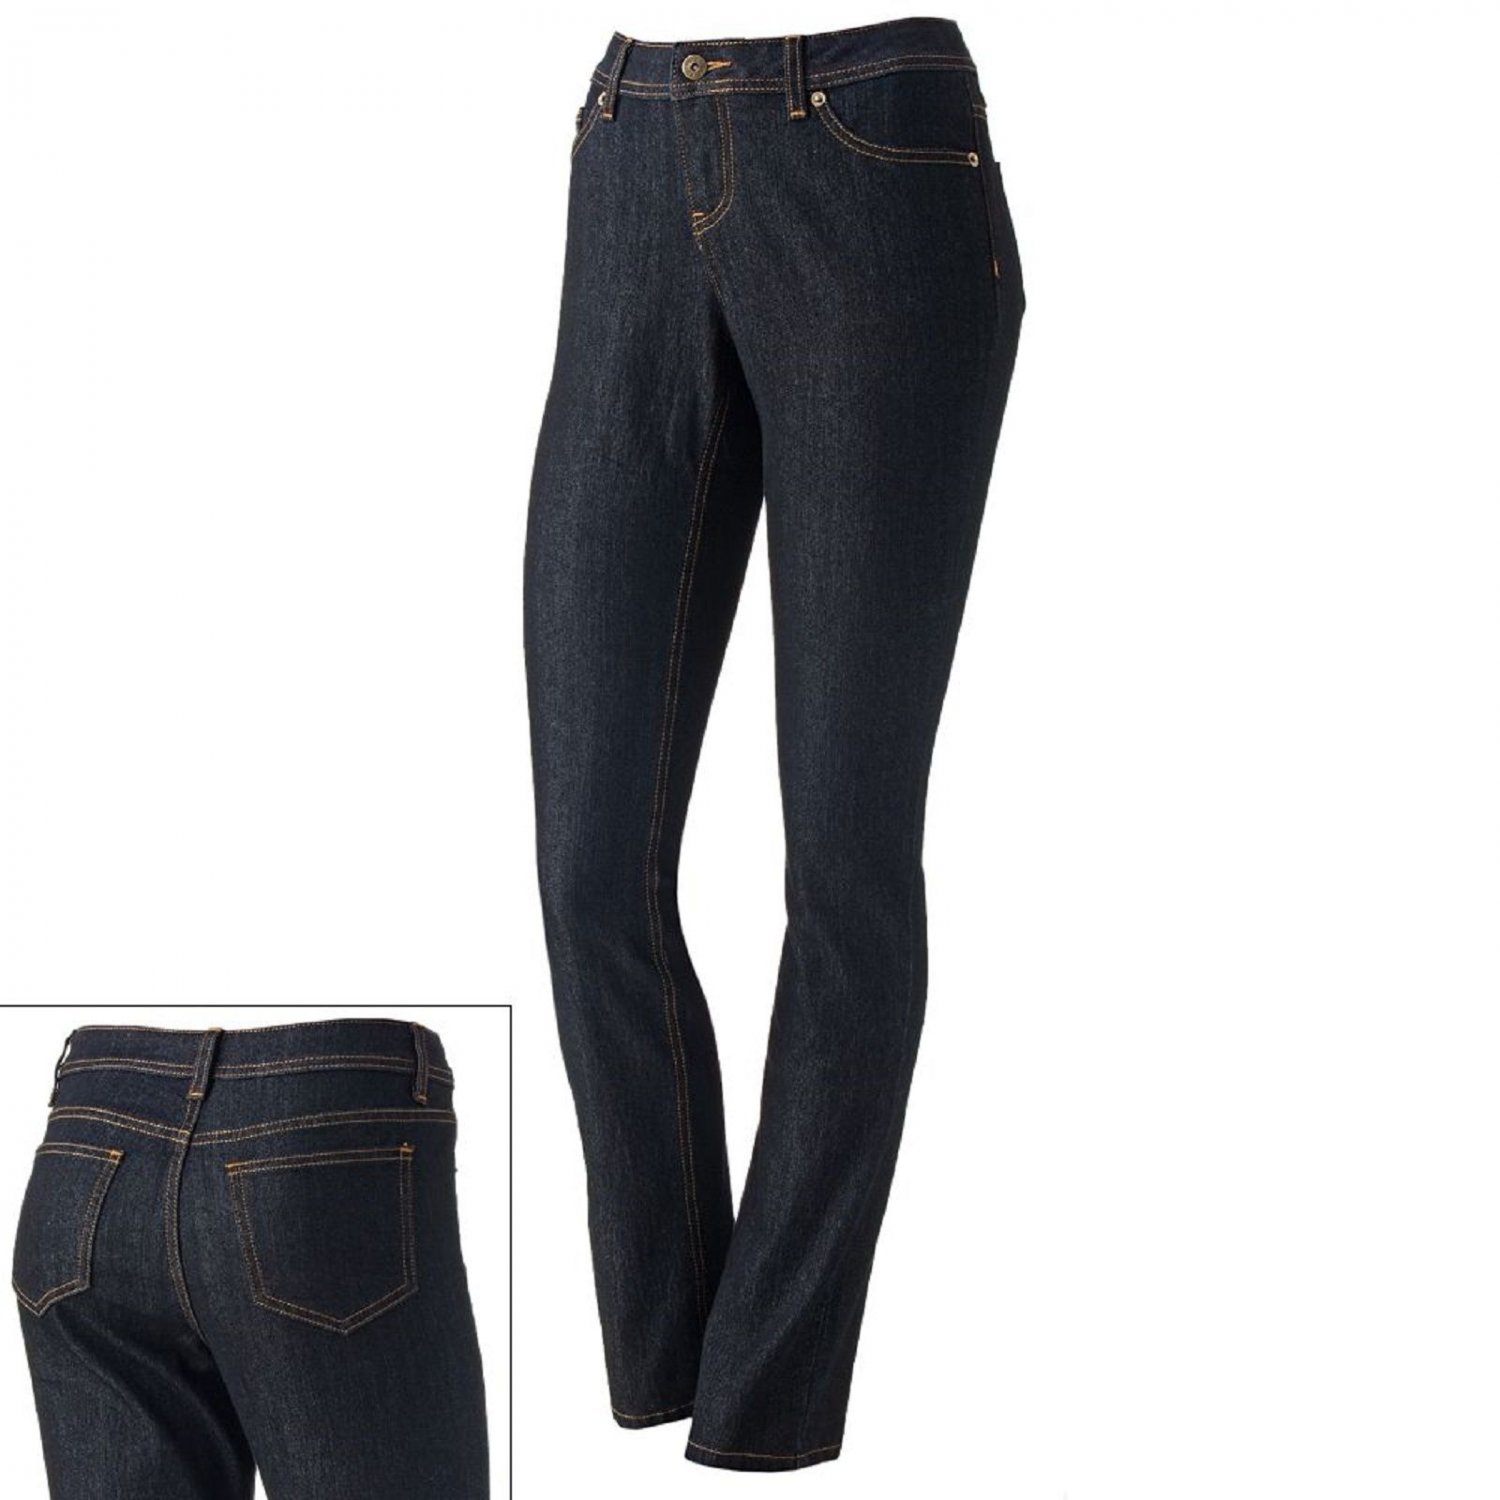 SO Juniors size 3 Super Skinny Jeans Short Dark Blue Rinse New